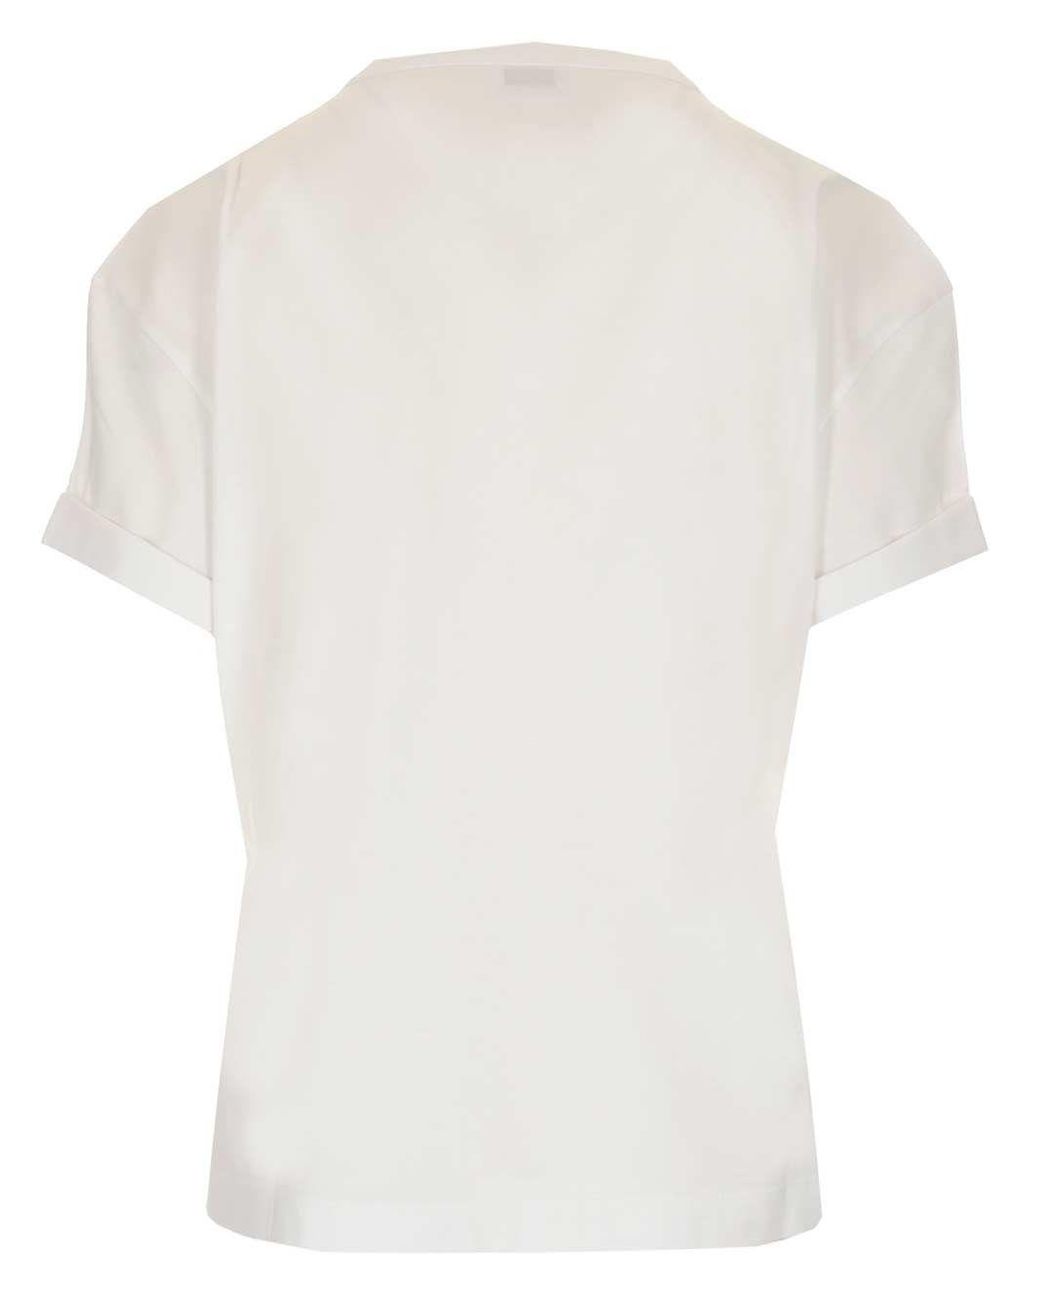 Brunello Cucinelli Cotton Other Materials T-shirt in White - Lyst